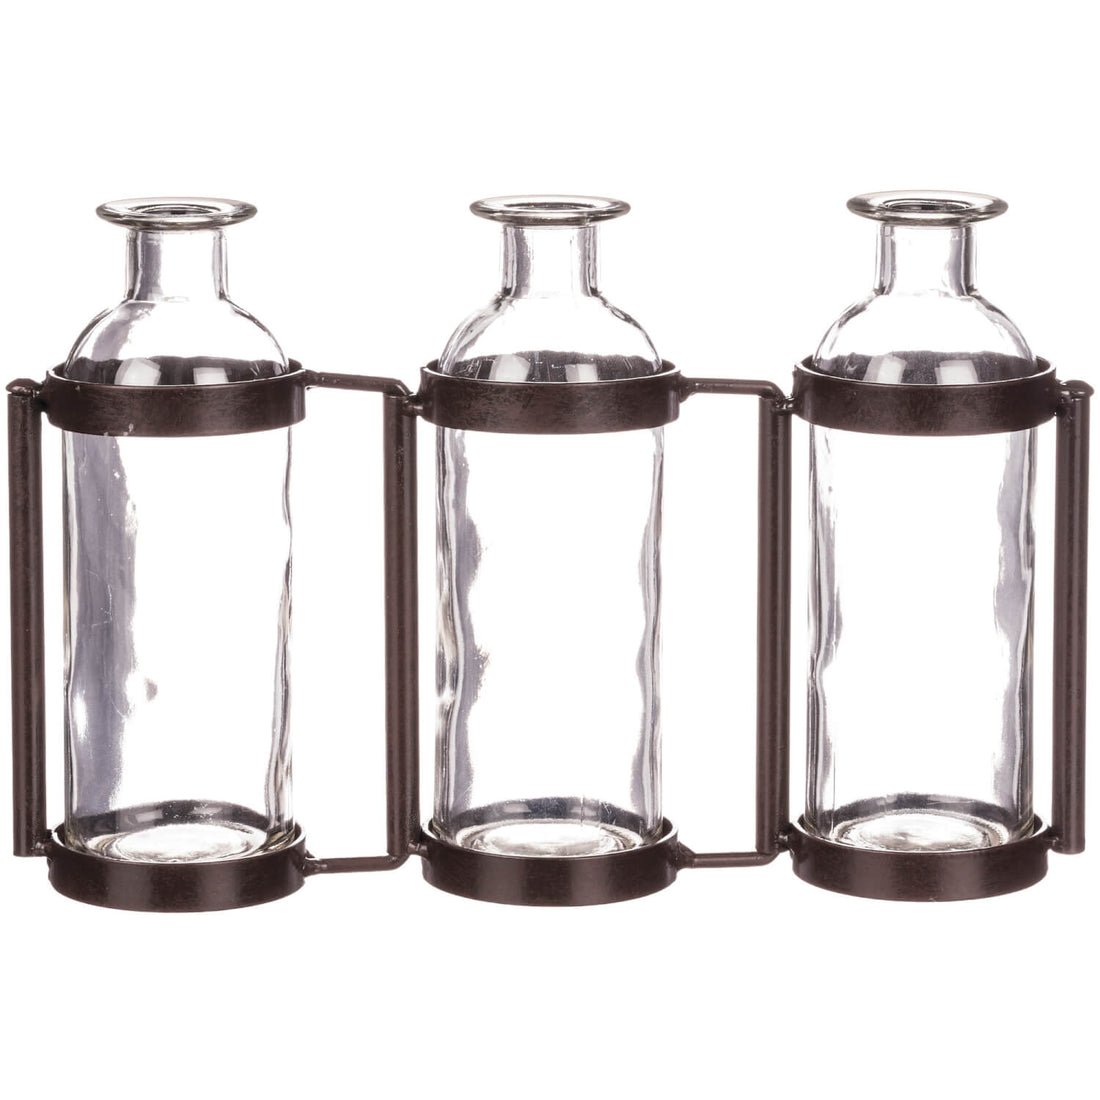 Three Bottle Vase